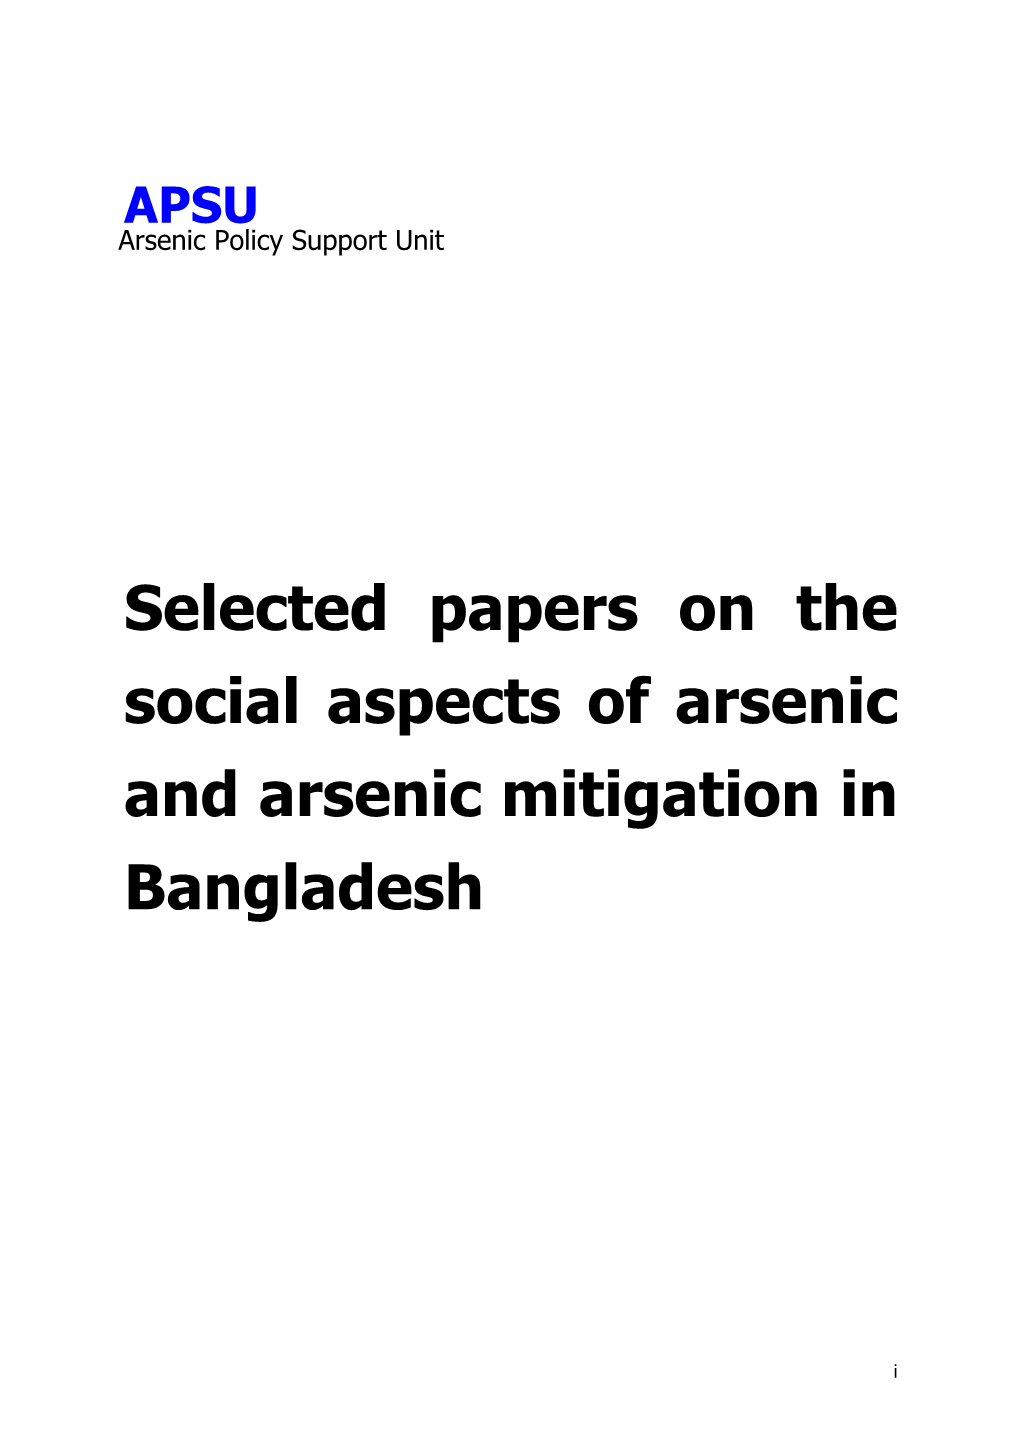 Gender Concerns in Arsenic Mitigation in Bangladesh: Trends and Challenges